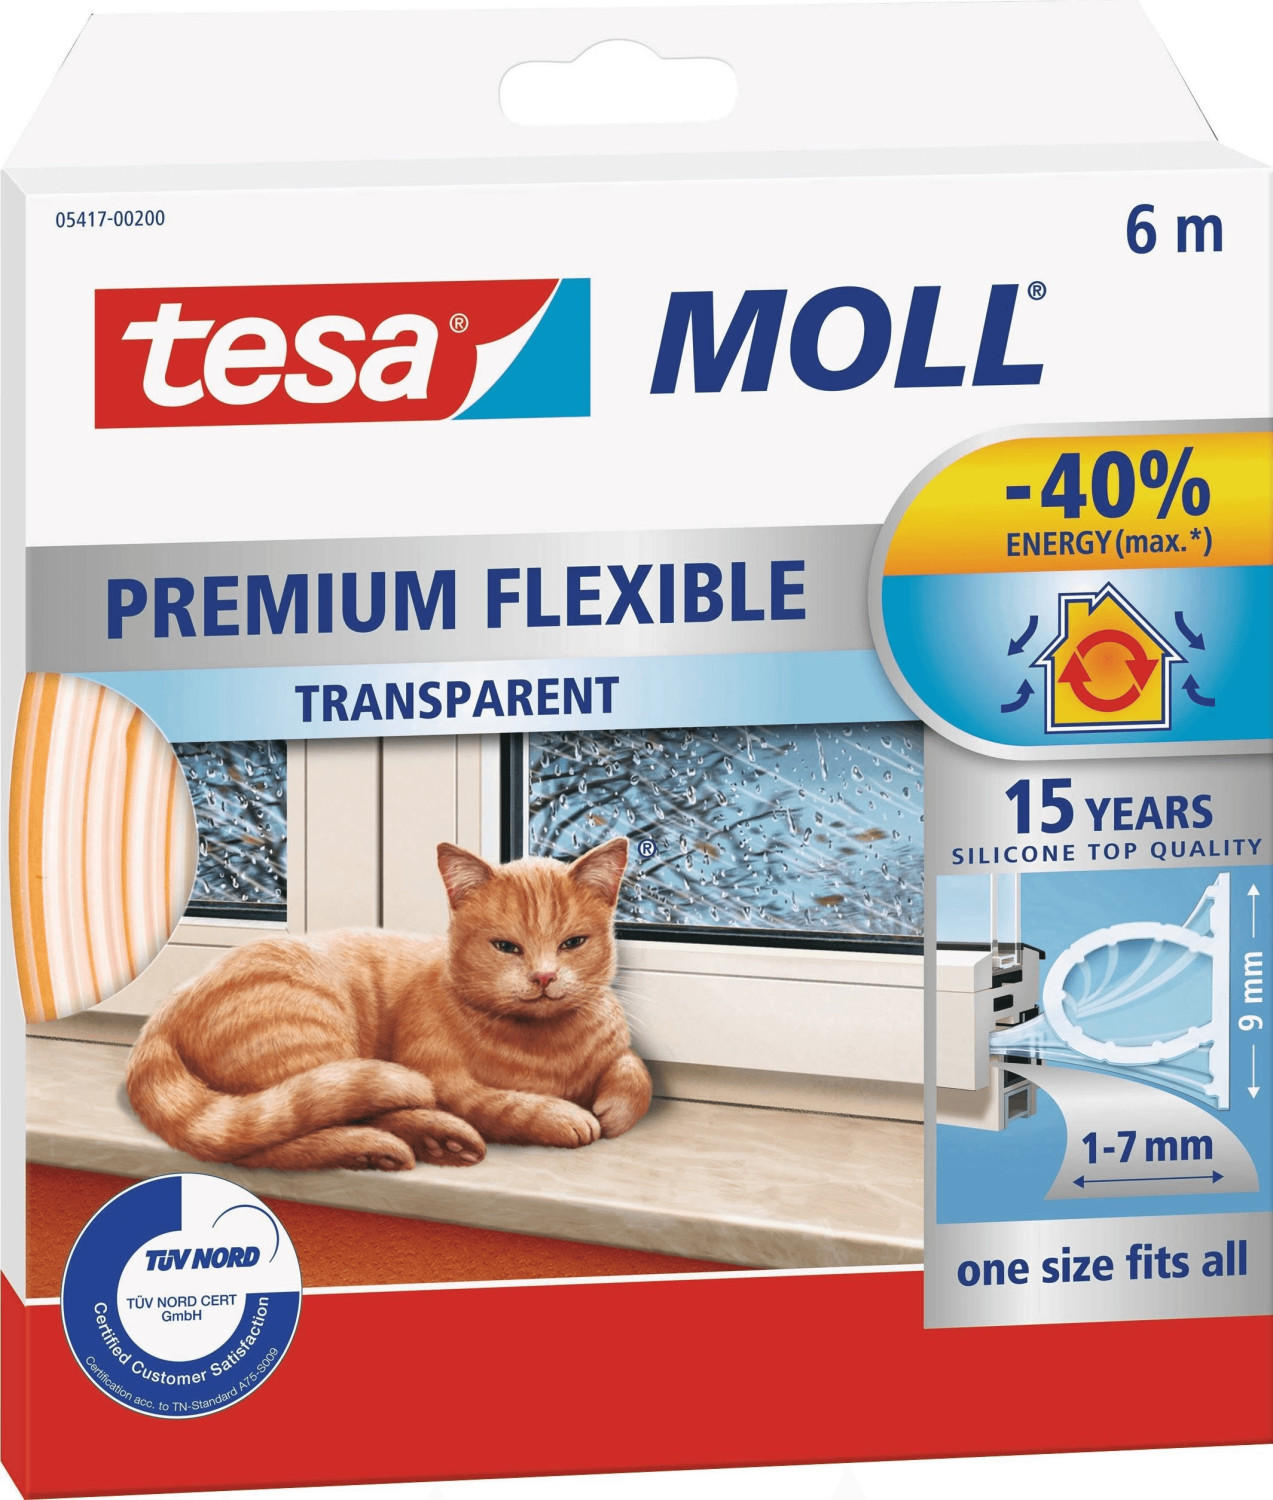 Tesa tesamoll Premium Flexible (05417) Test ❤️ Testbericht.de März 2022